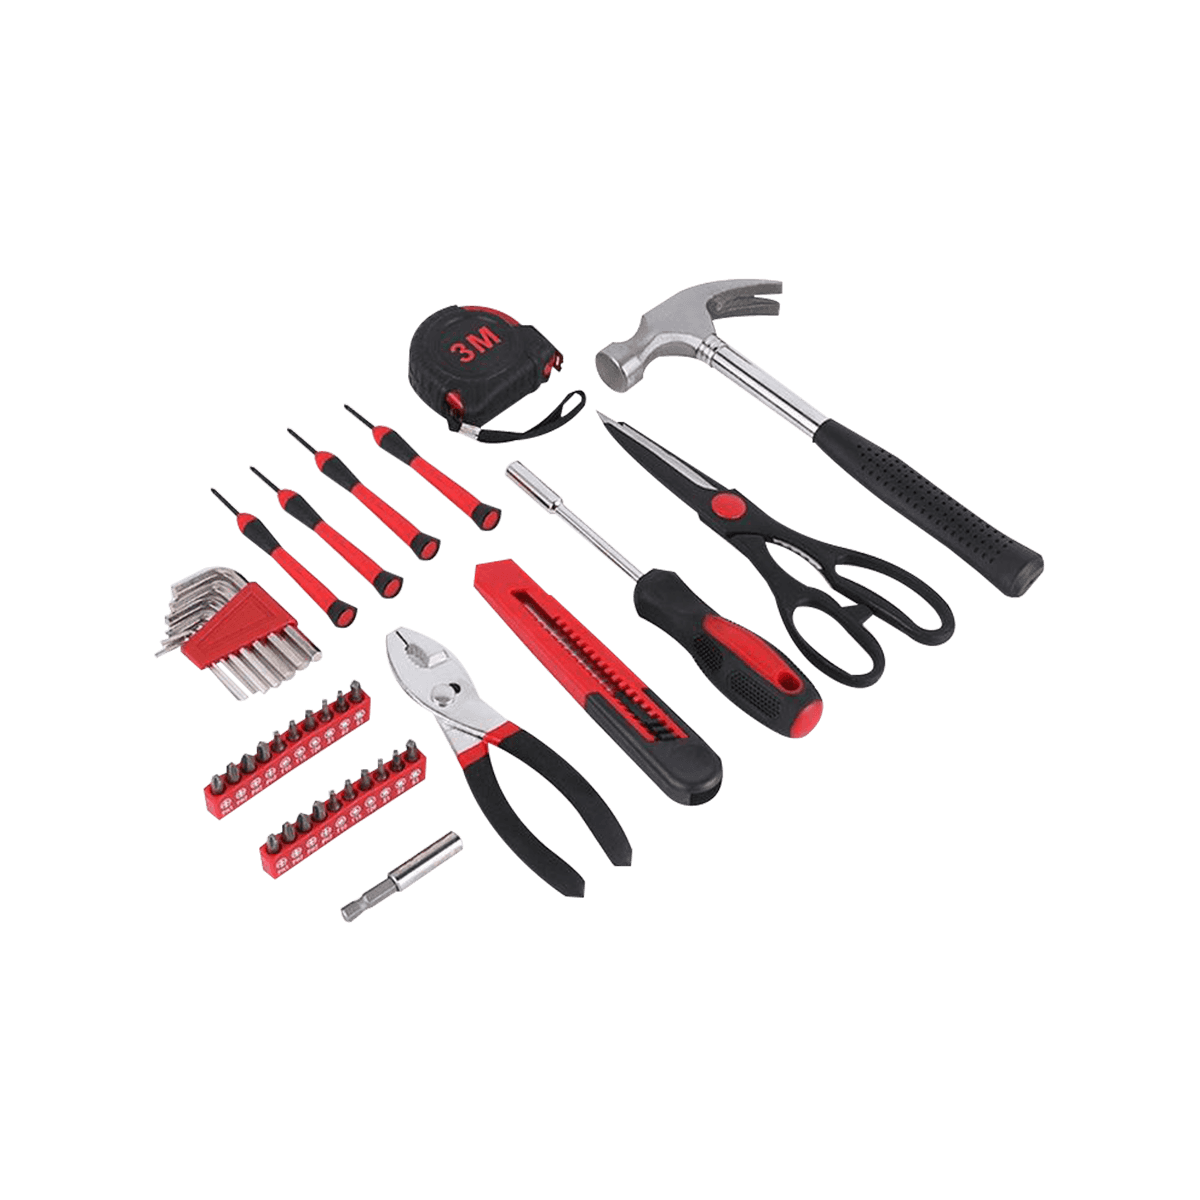 39 Pieces Tool Set Kit Perkakas Tangan Rumah Tangga dengan Penyimpanan Kotak Alat Portabel